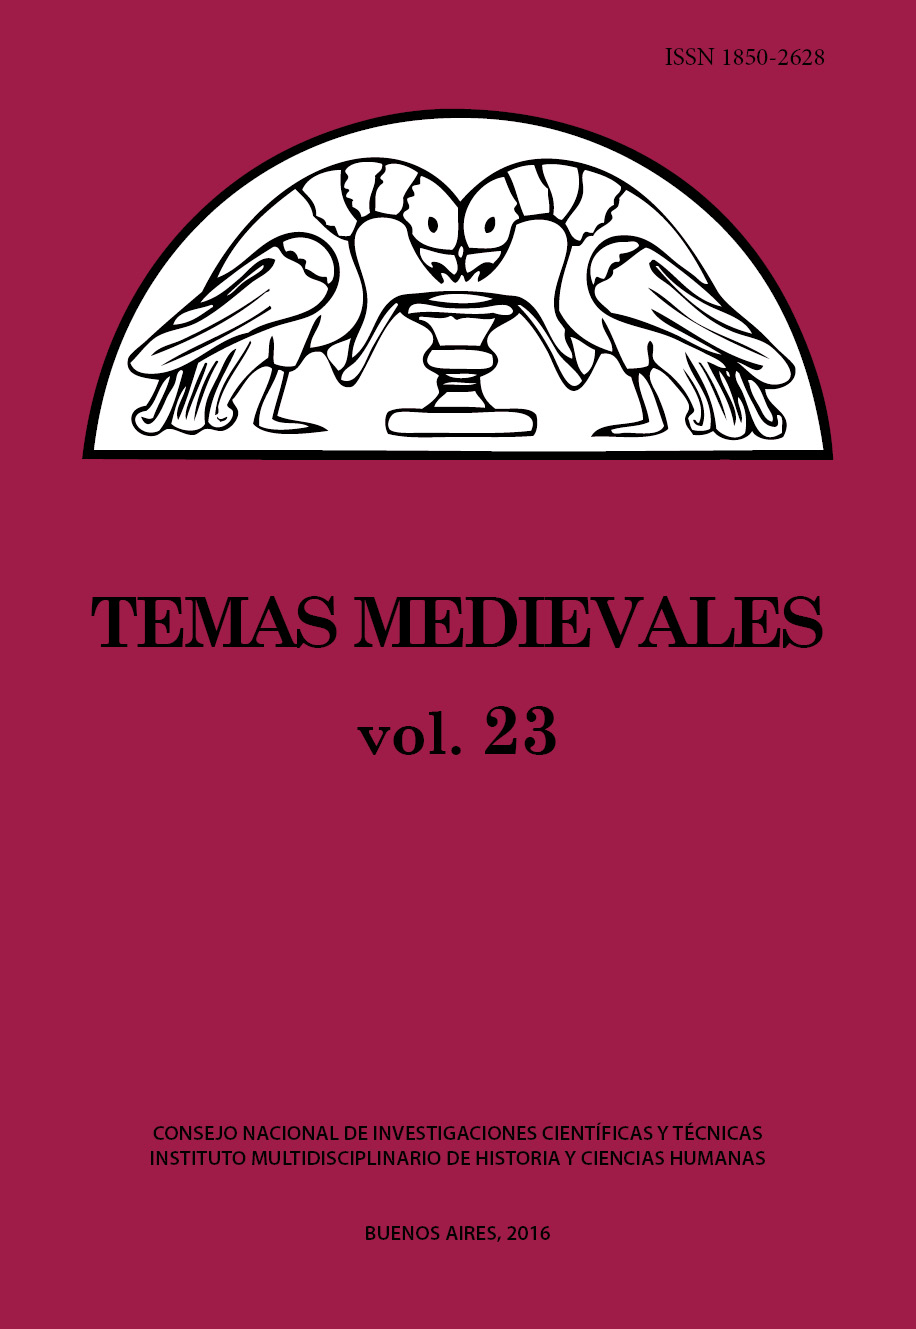 Temas Medievales vol. 23